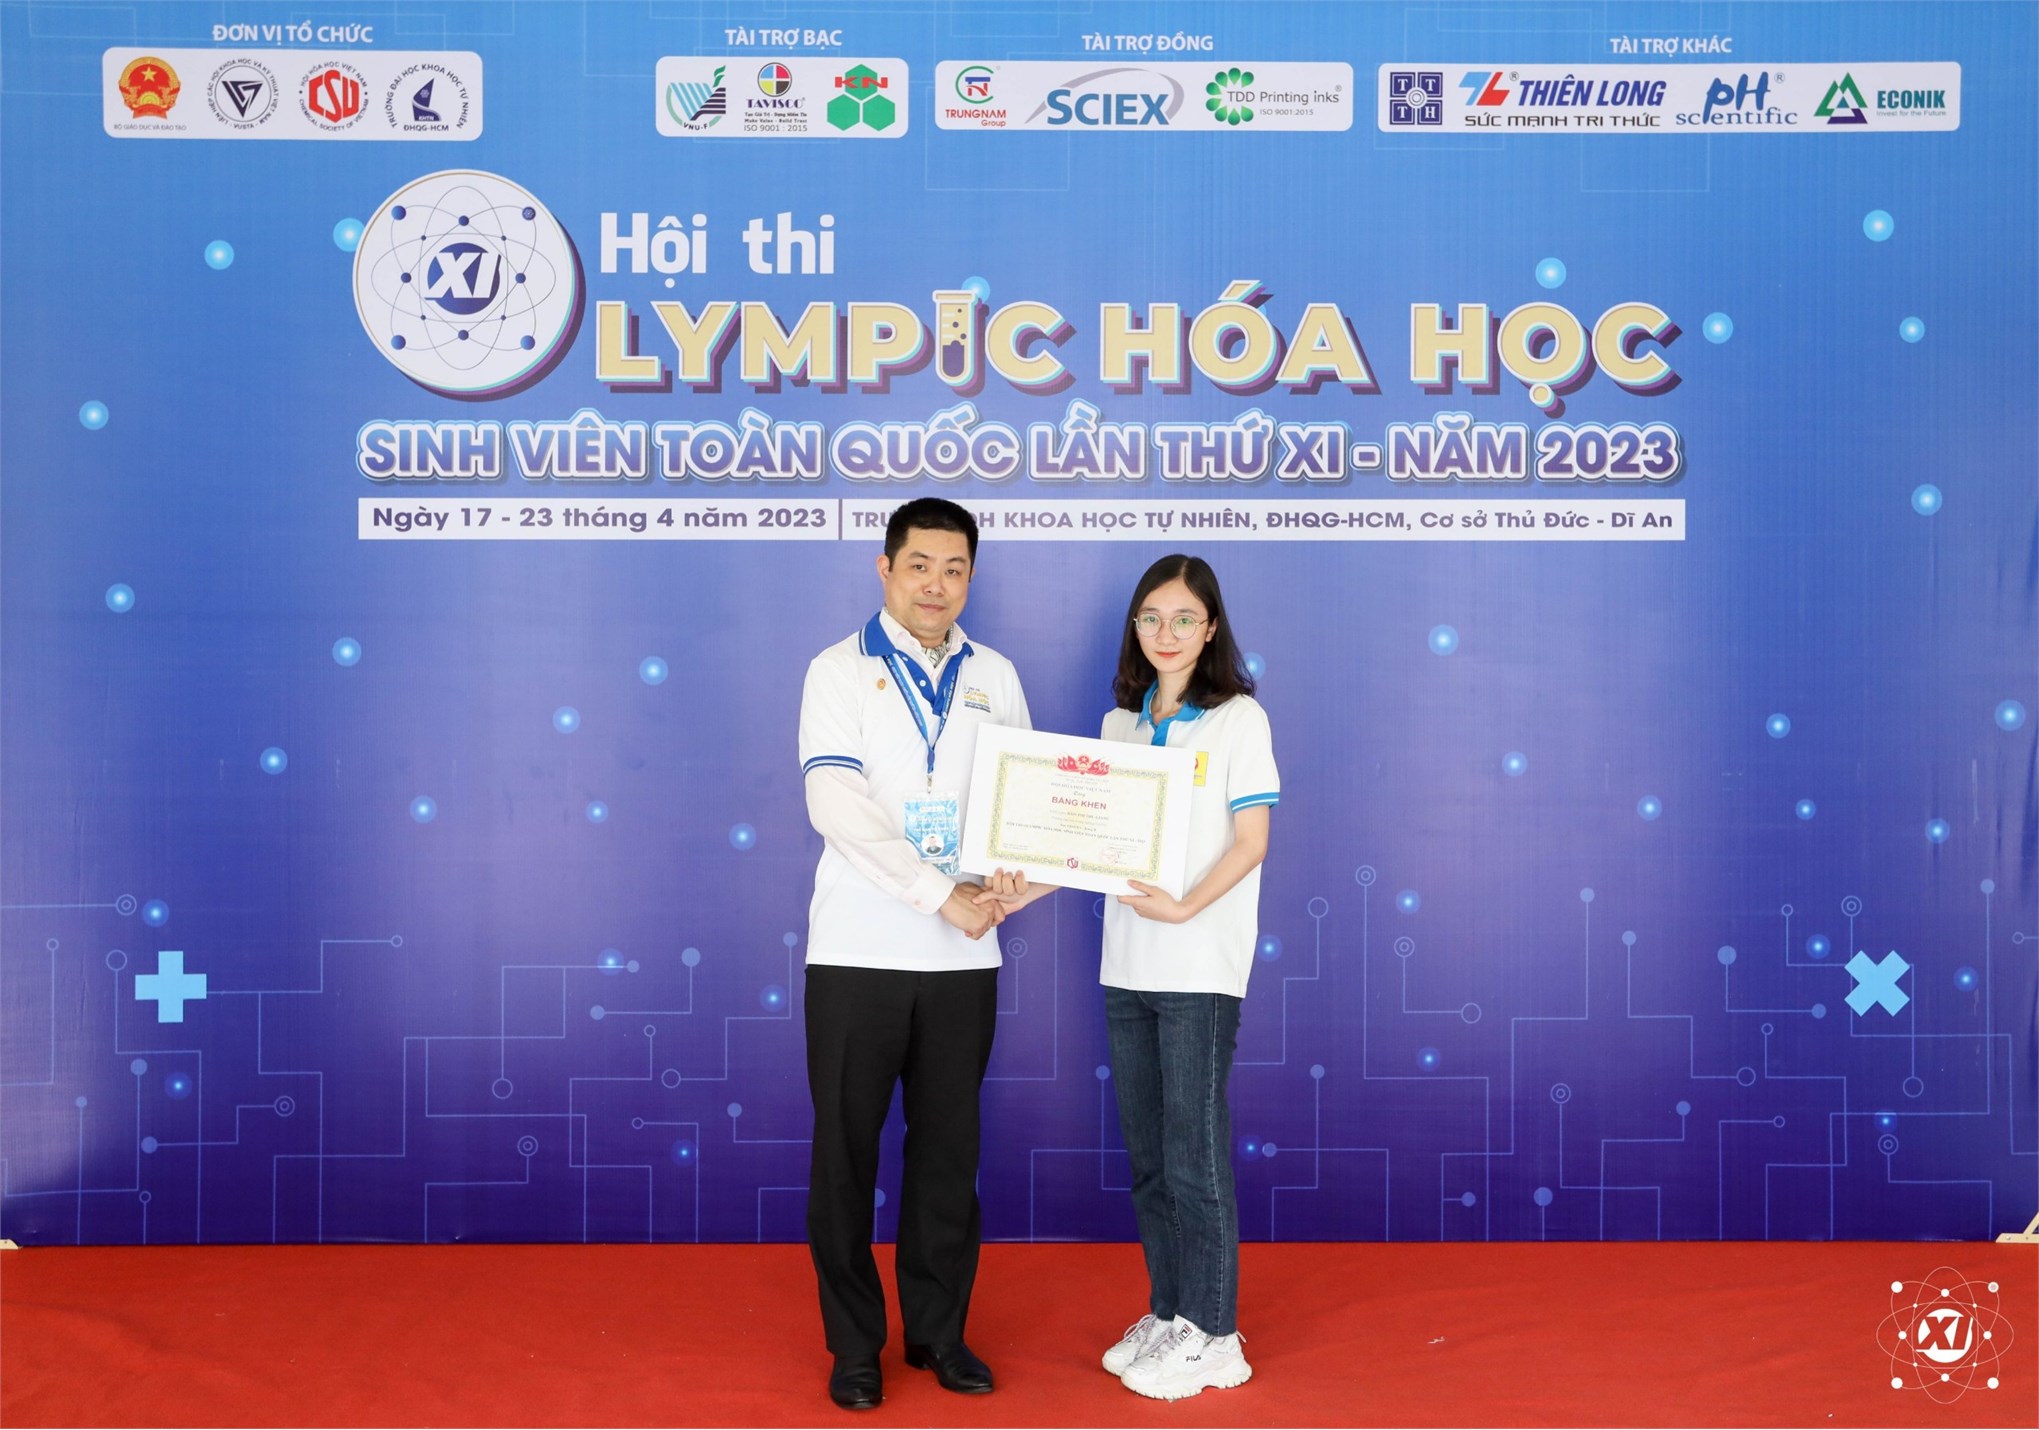 The Chemistry Olympiad team of Hanoi University of Industry